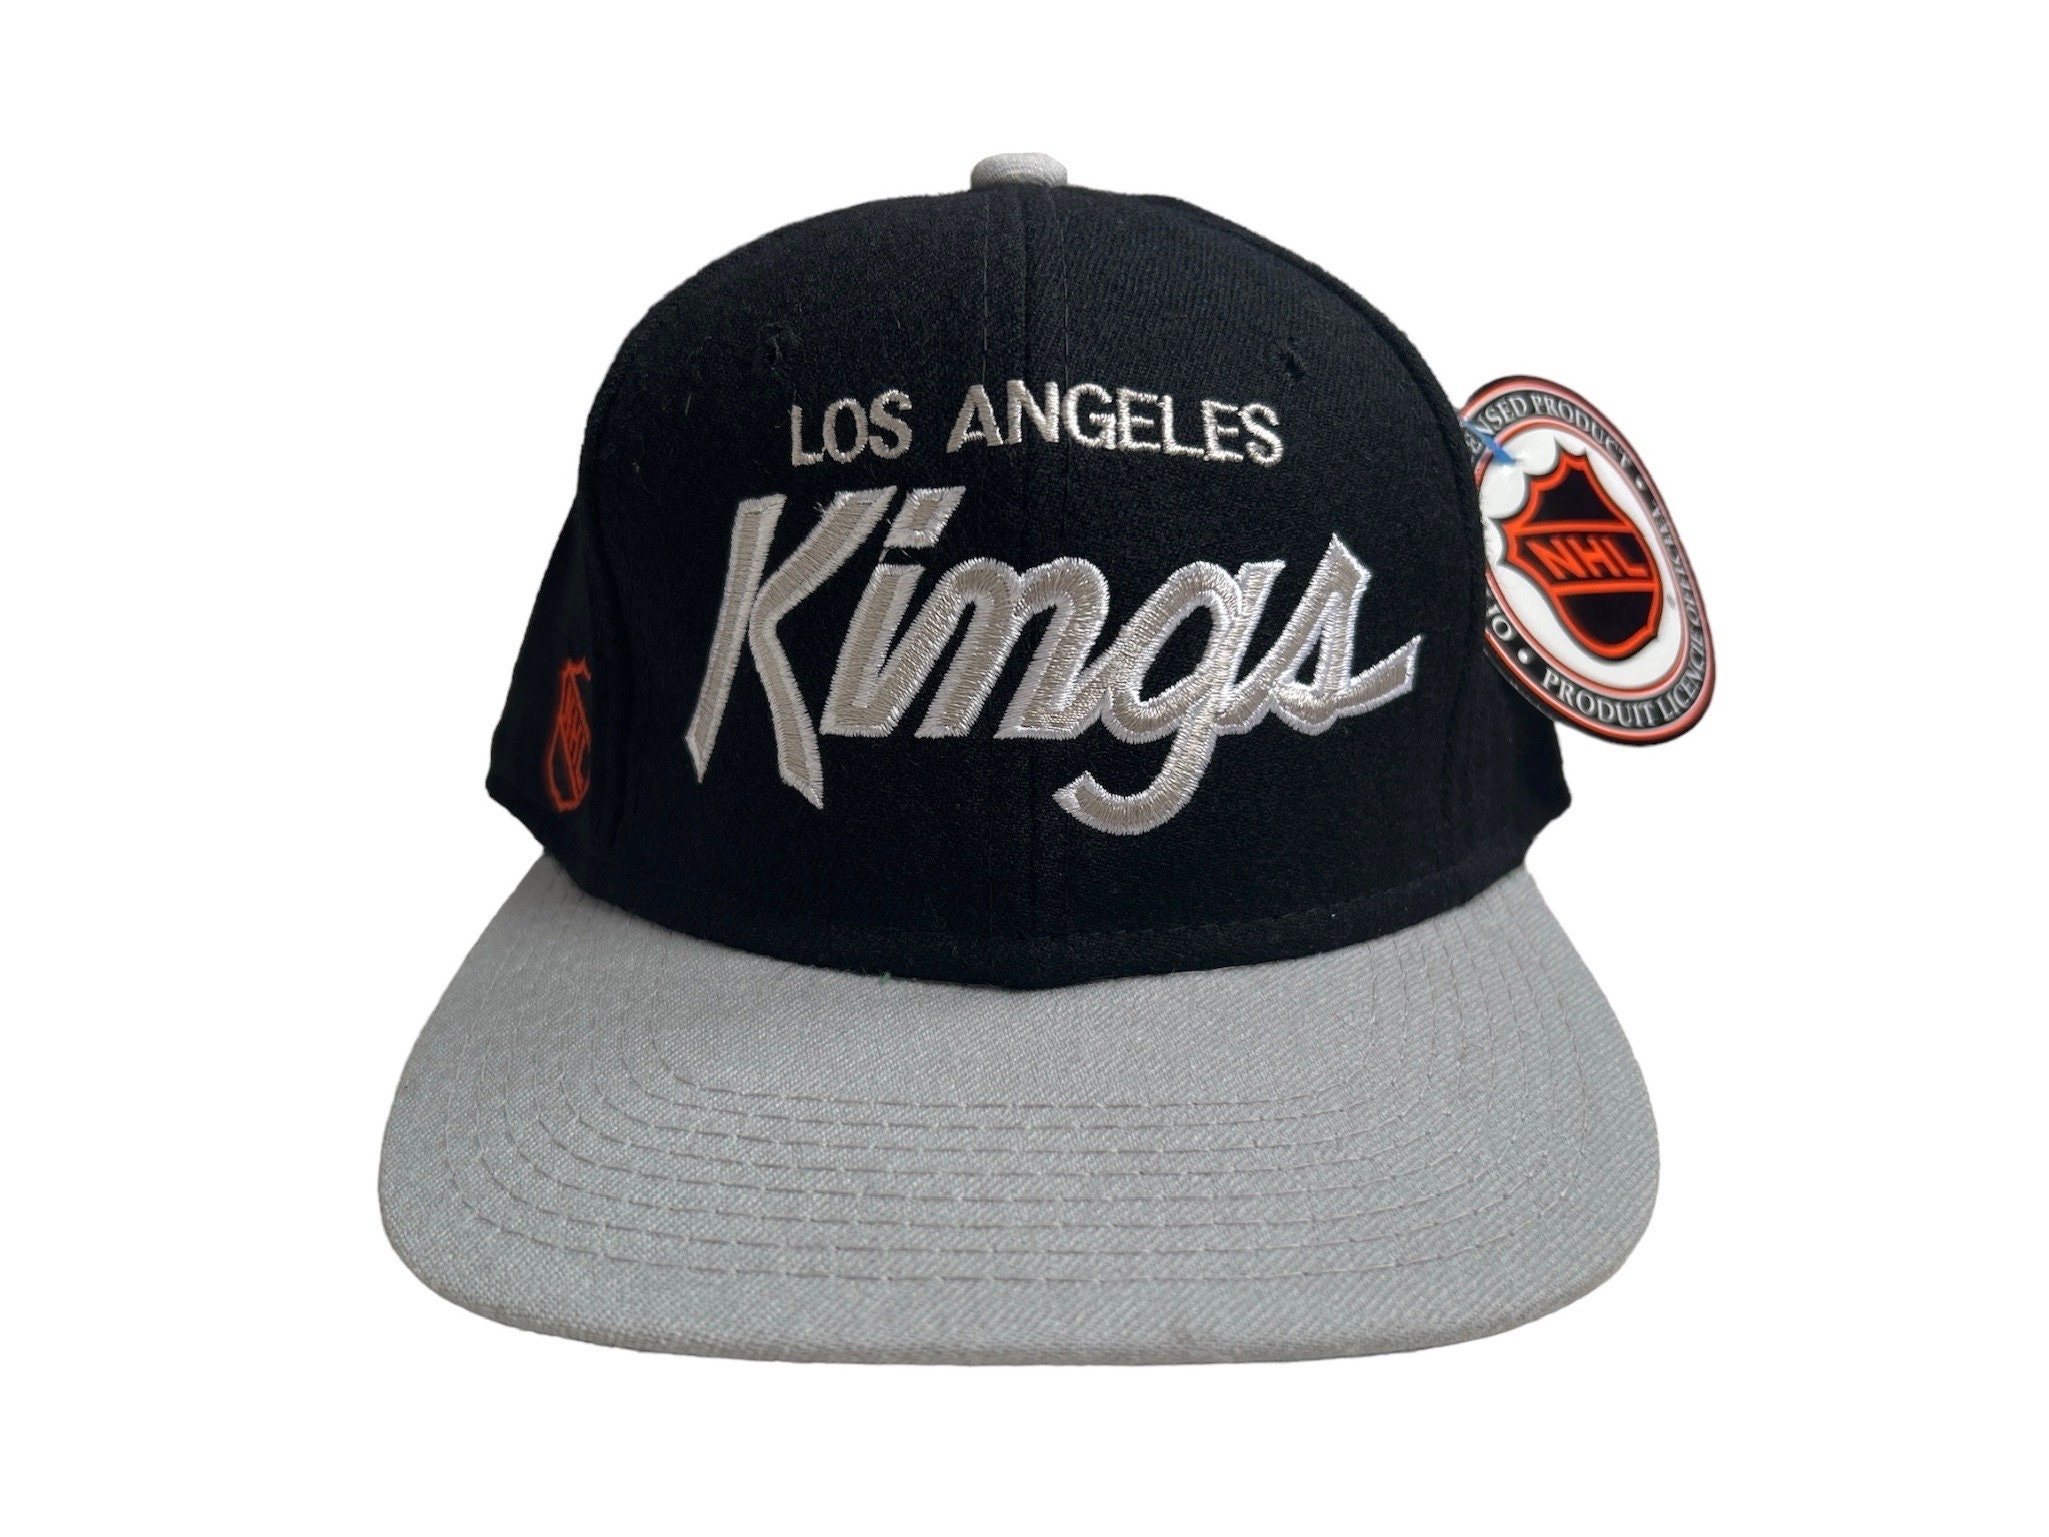 Los Angeles Kings VINTAGE SCRIPT SHOOTOUT Black Fitted Hat by Zep